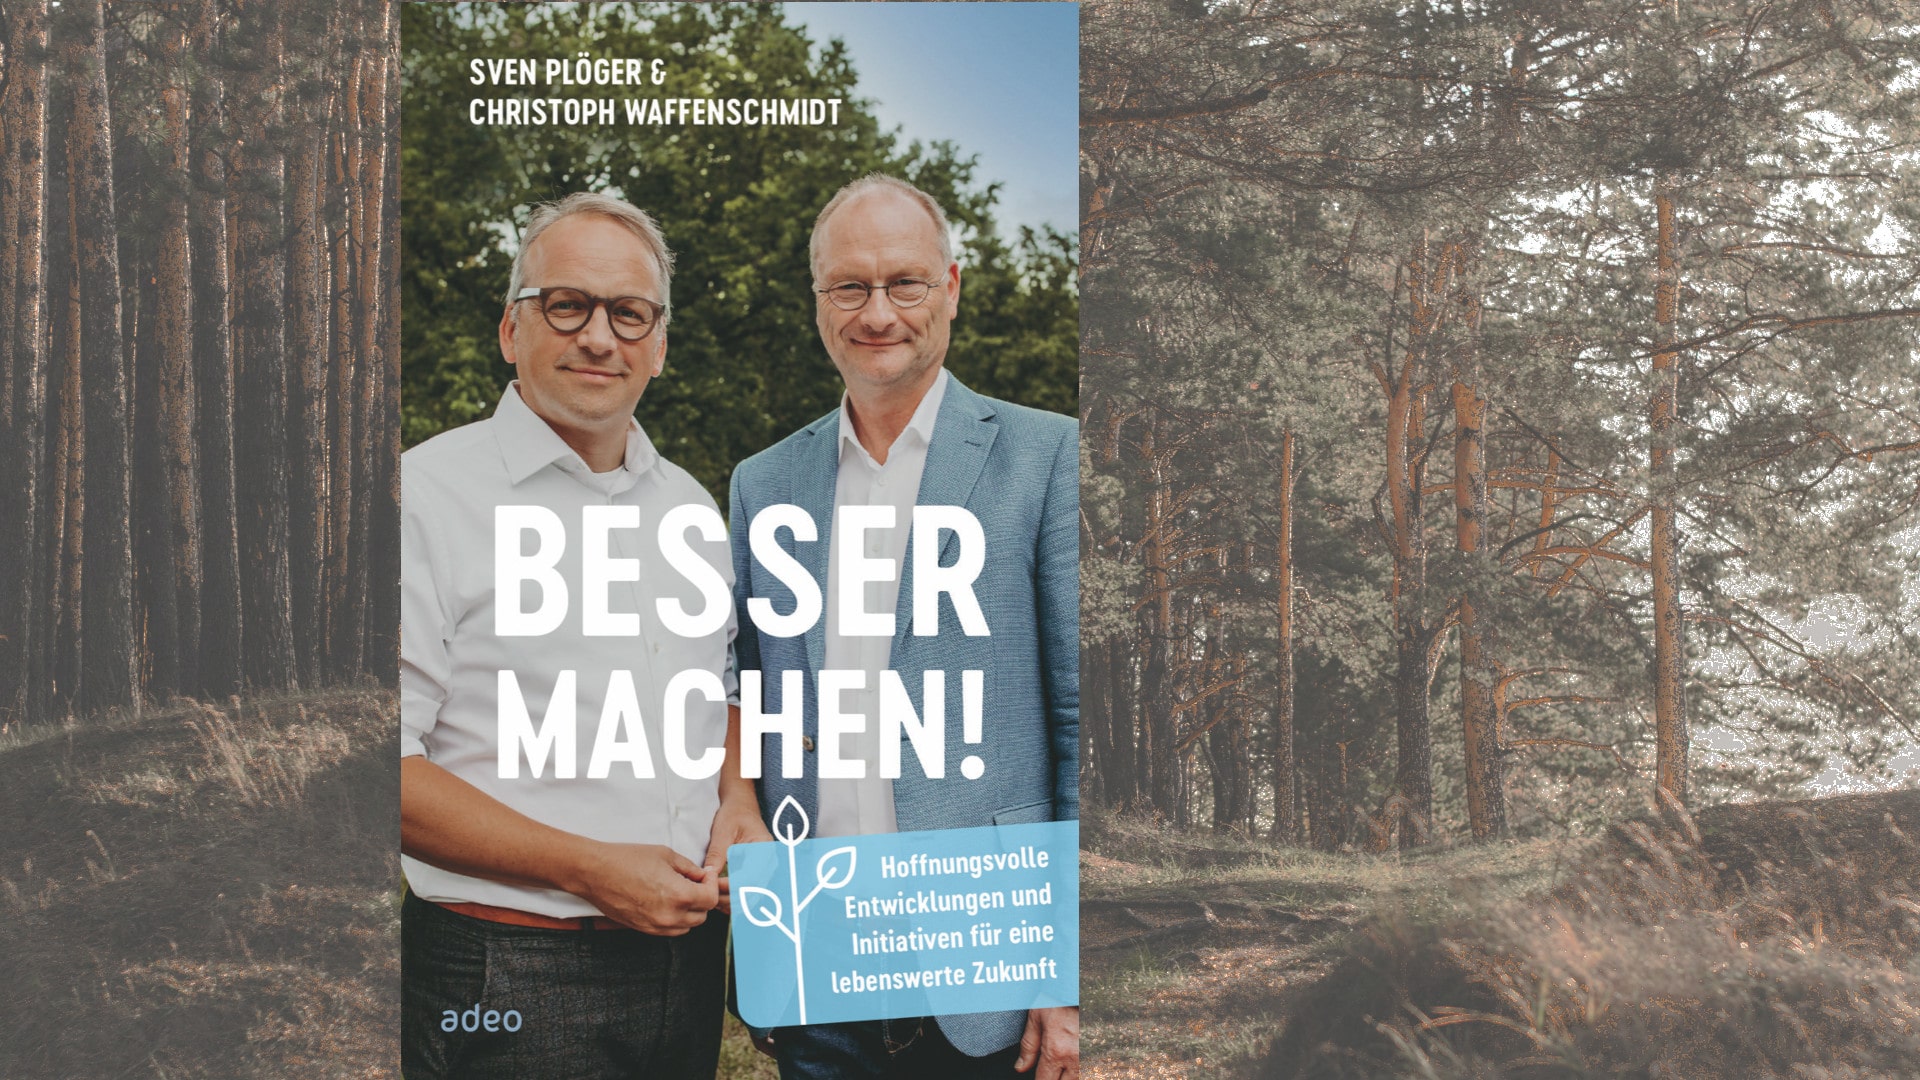 Sven Plöger, Christoph Waffenschmidt: „Besser machen!“